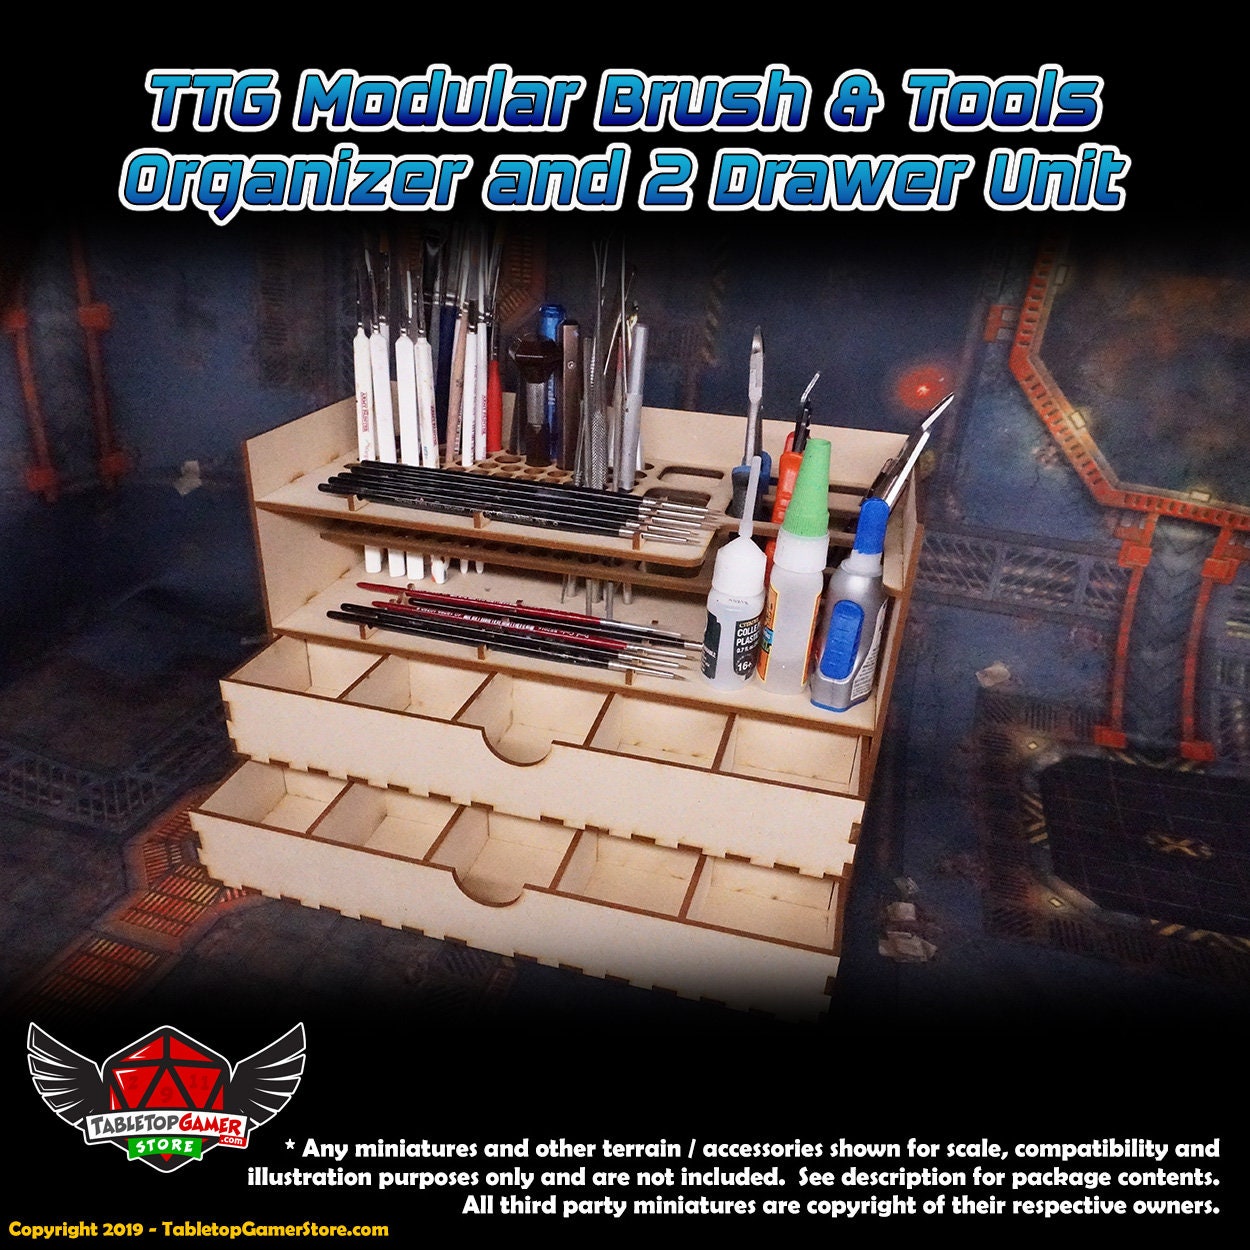 Accessories - TTG Modular Hobby Organizer System